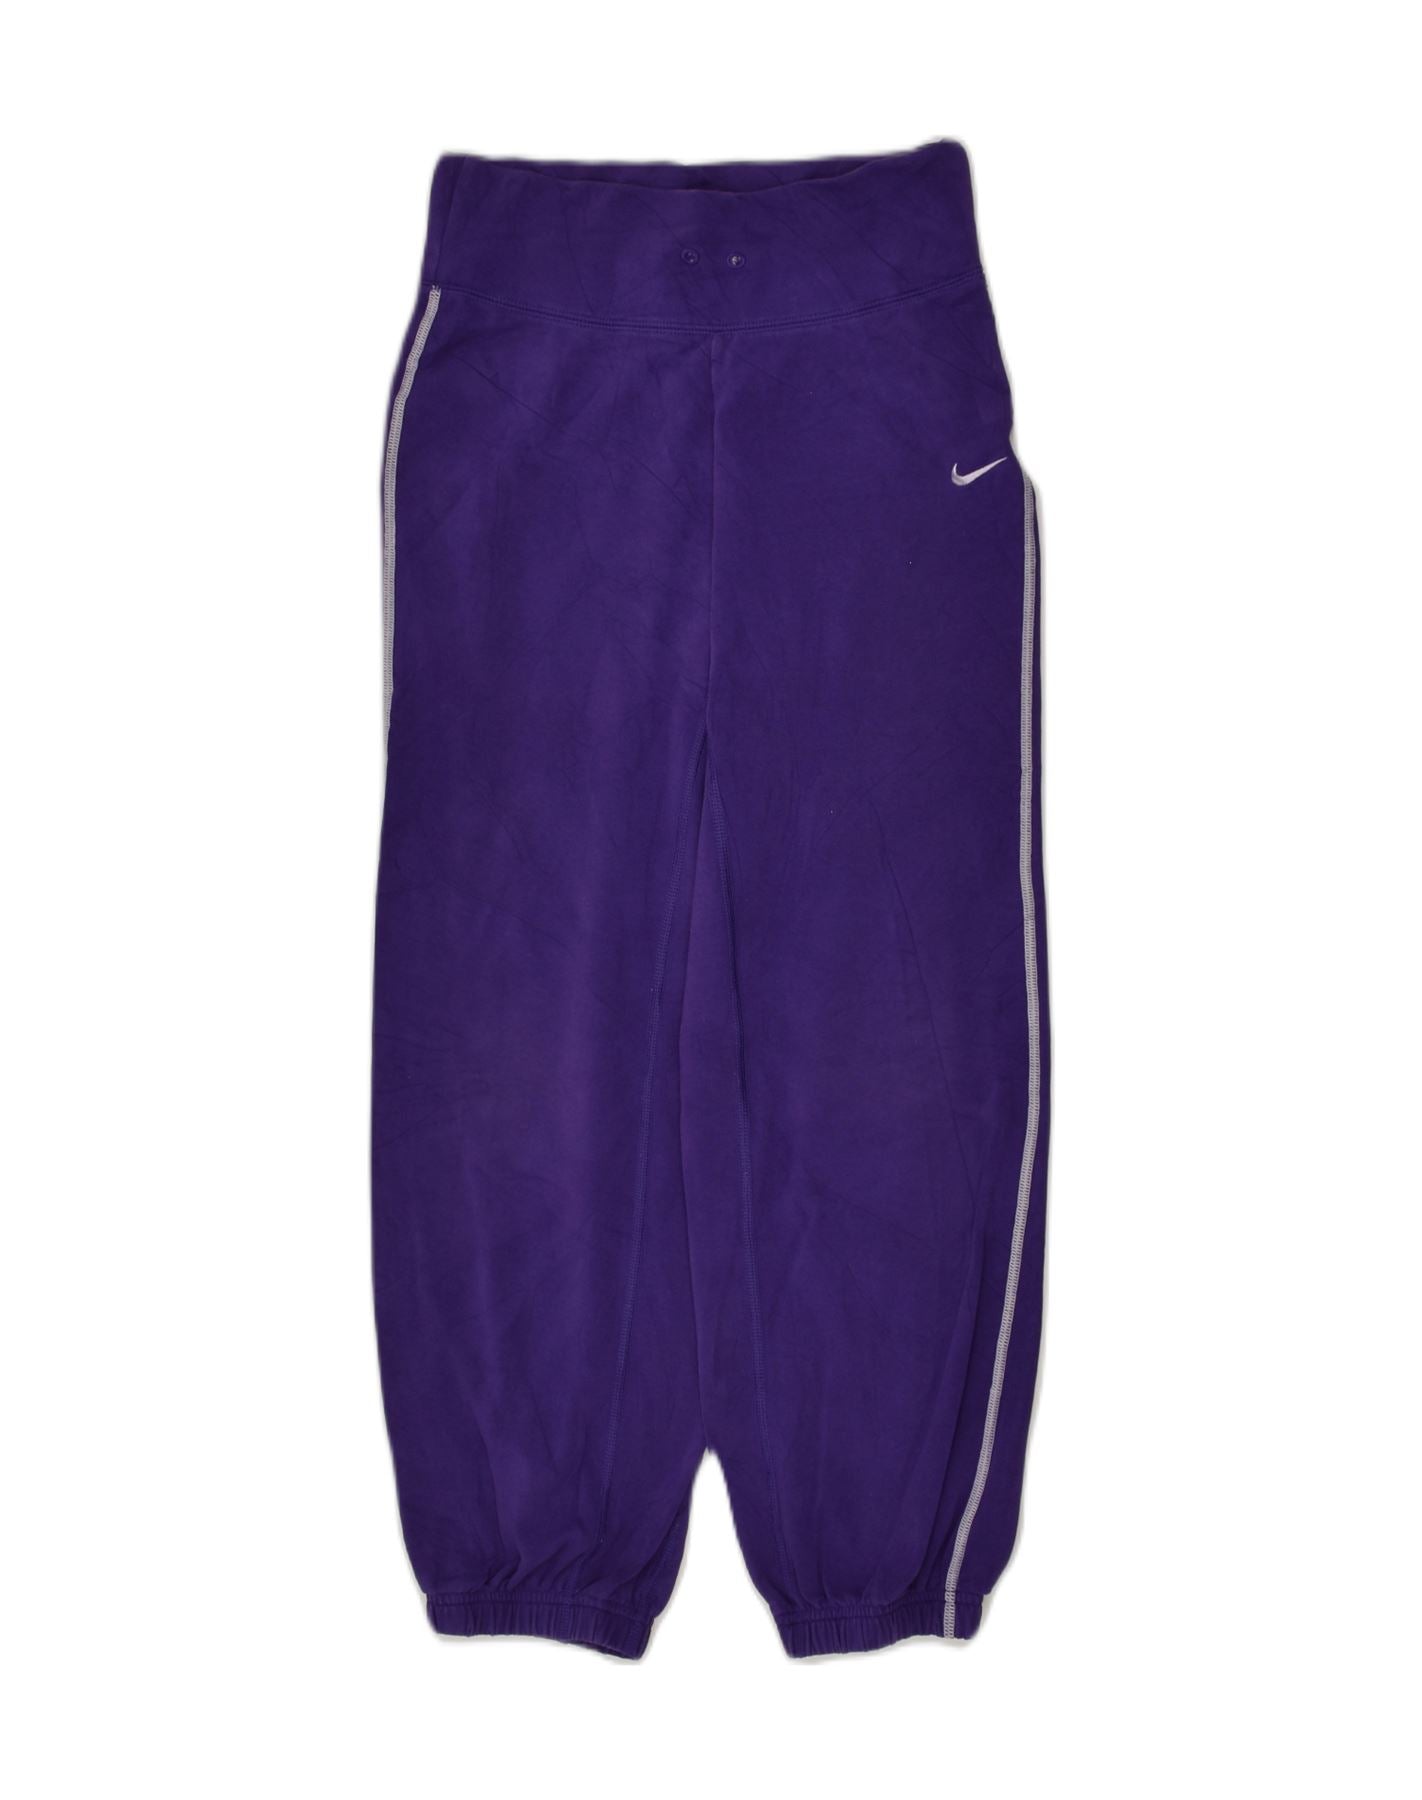 NIKE Womens Capri Tracksuit Trousers Joggers UK 12 Medium Purple Cotton, Vintage & Second-Hand Clothing Online